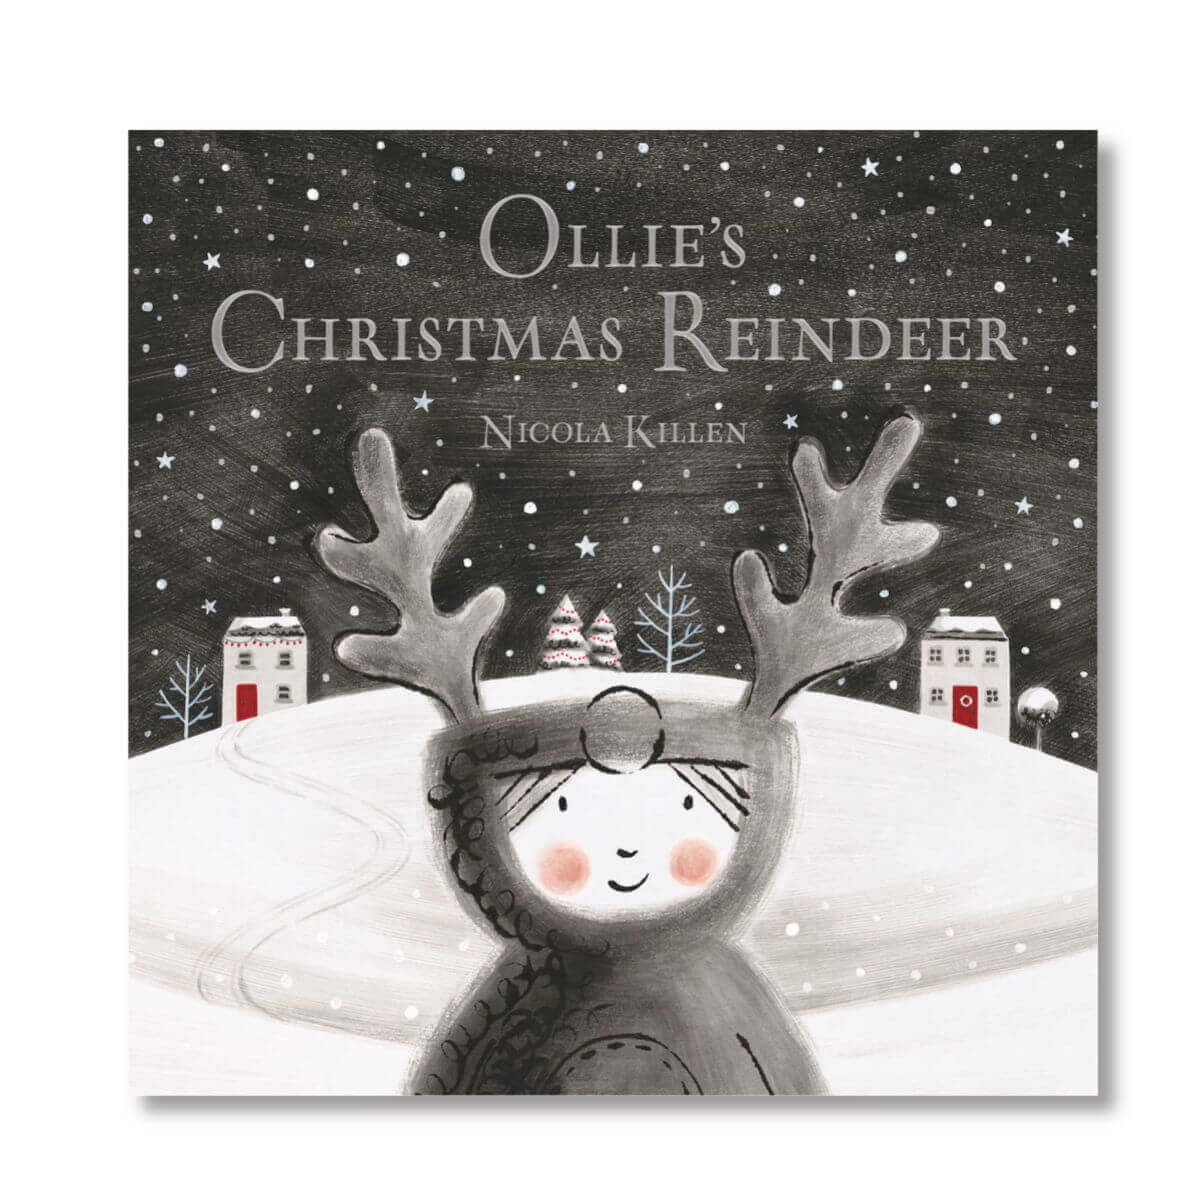 ollie's christmas reindeer children's bookby nicola killen